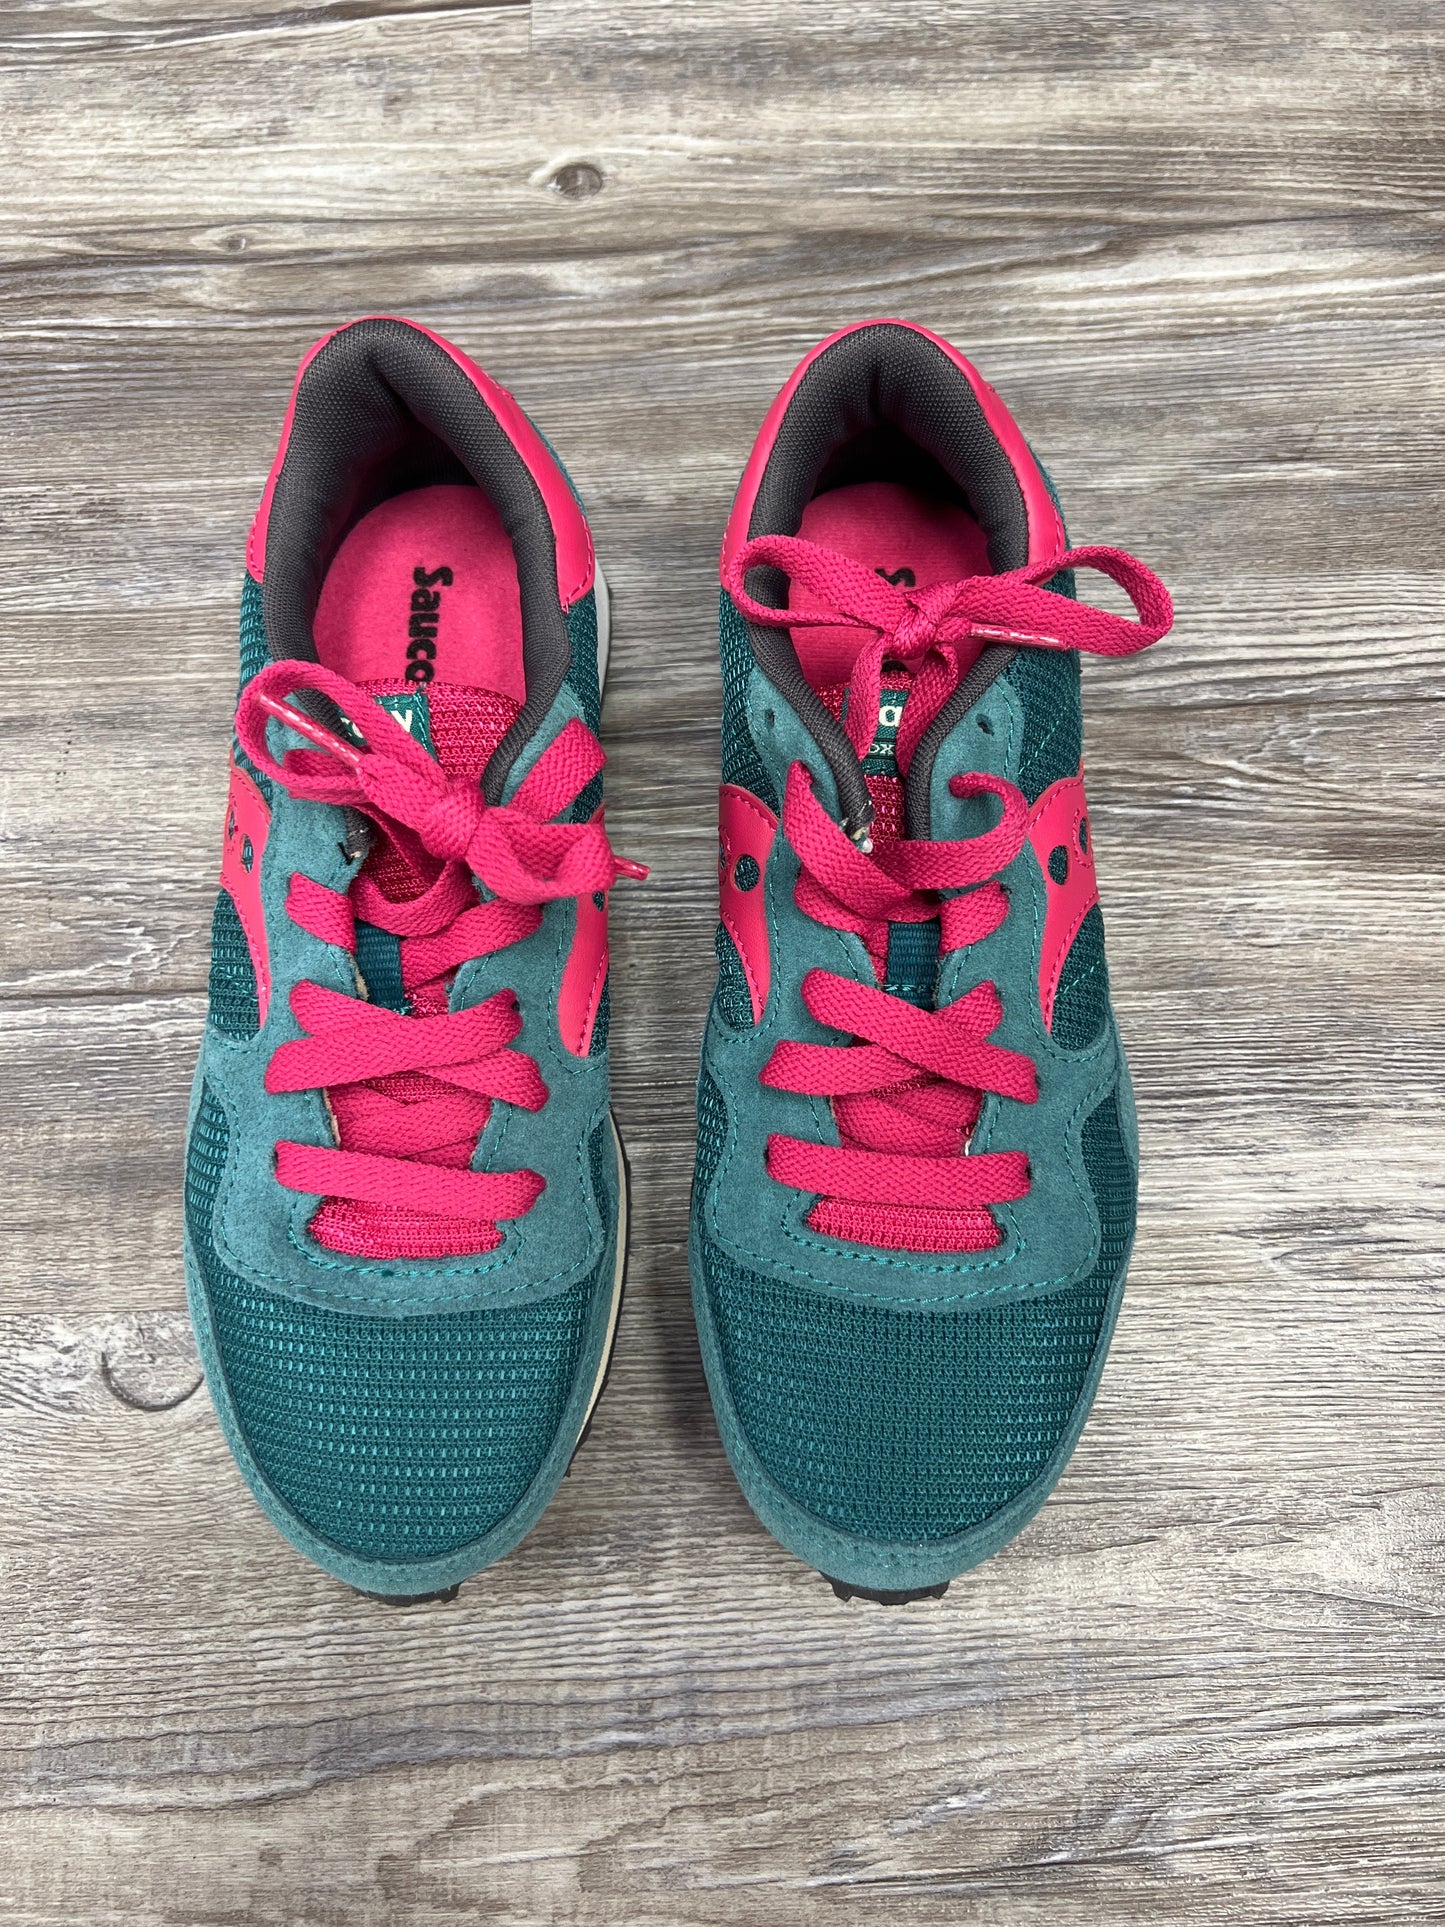 Blue & Pink Shoes Athletic Saucony, Size 6.5